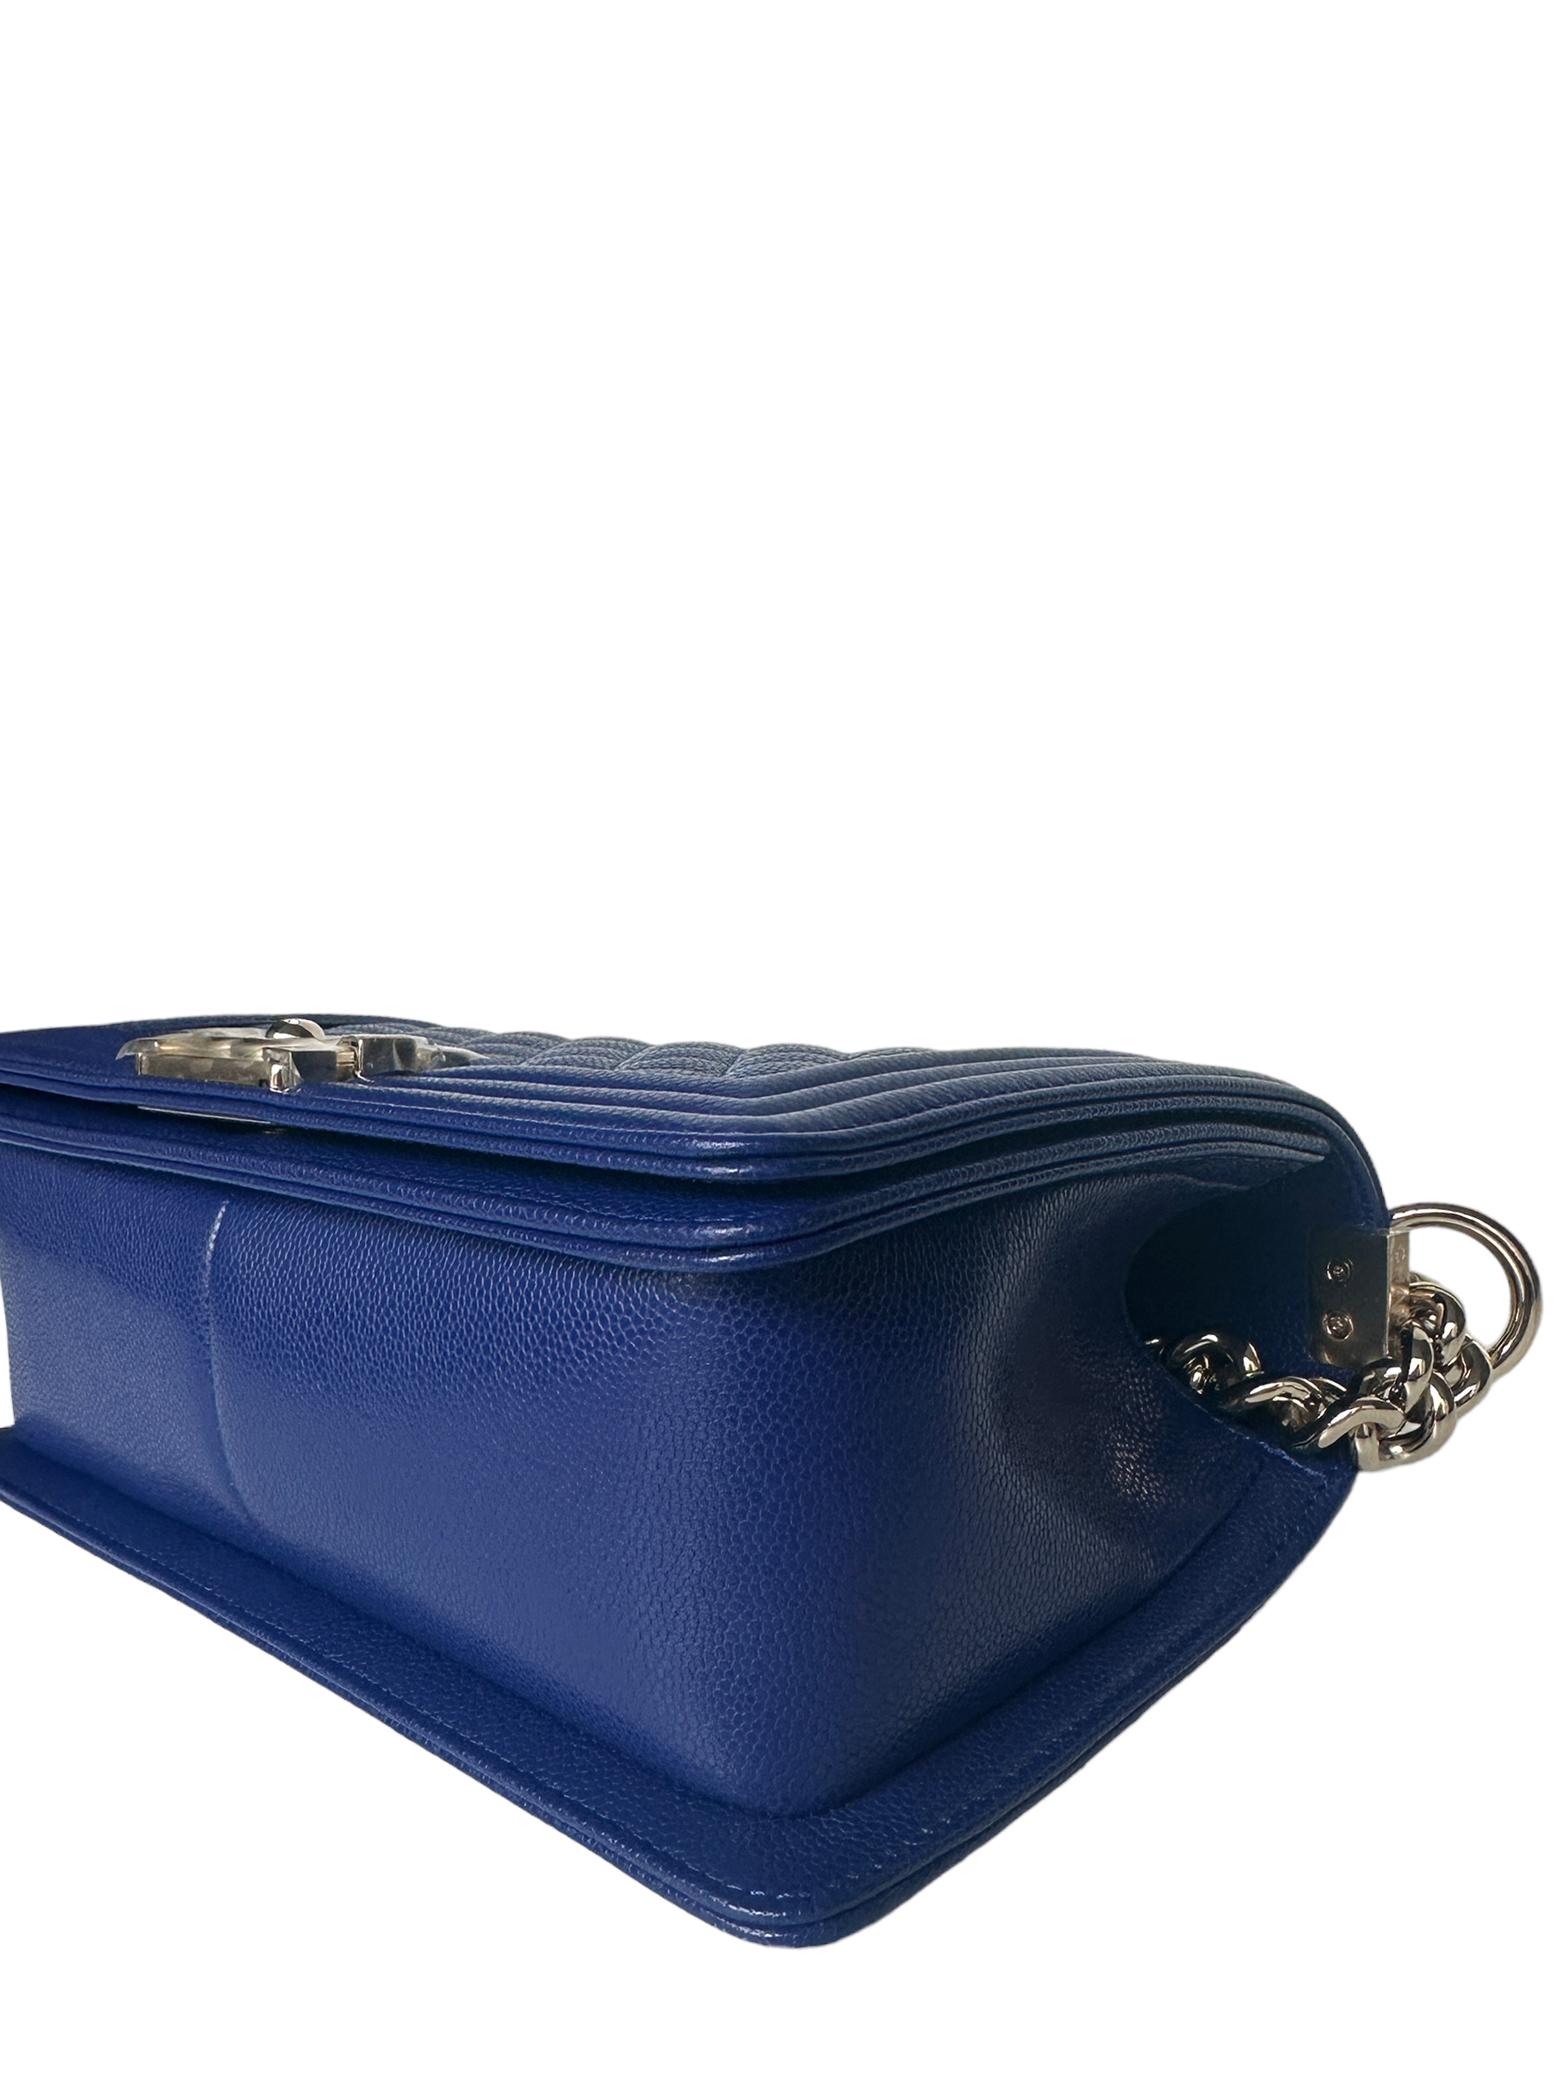 Chanel NEW Cobalt Blue Caviar Leather Quilted Medium Boy Bag 1